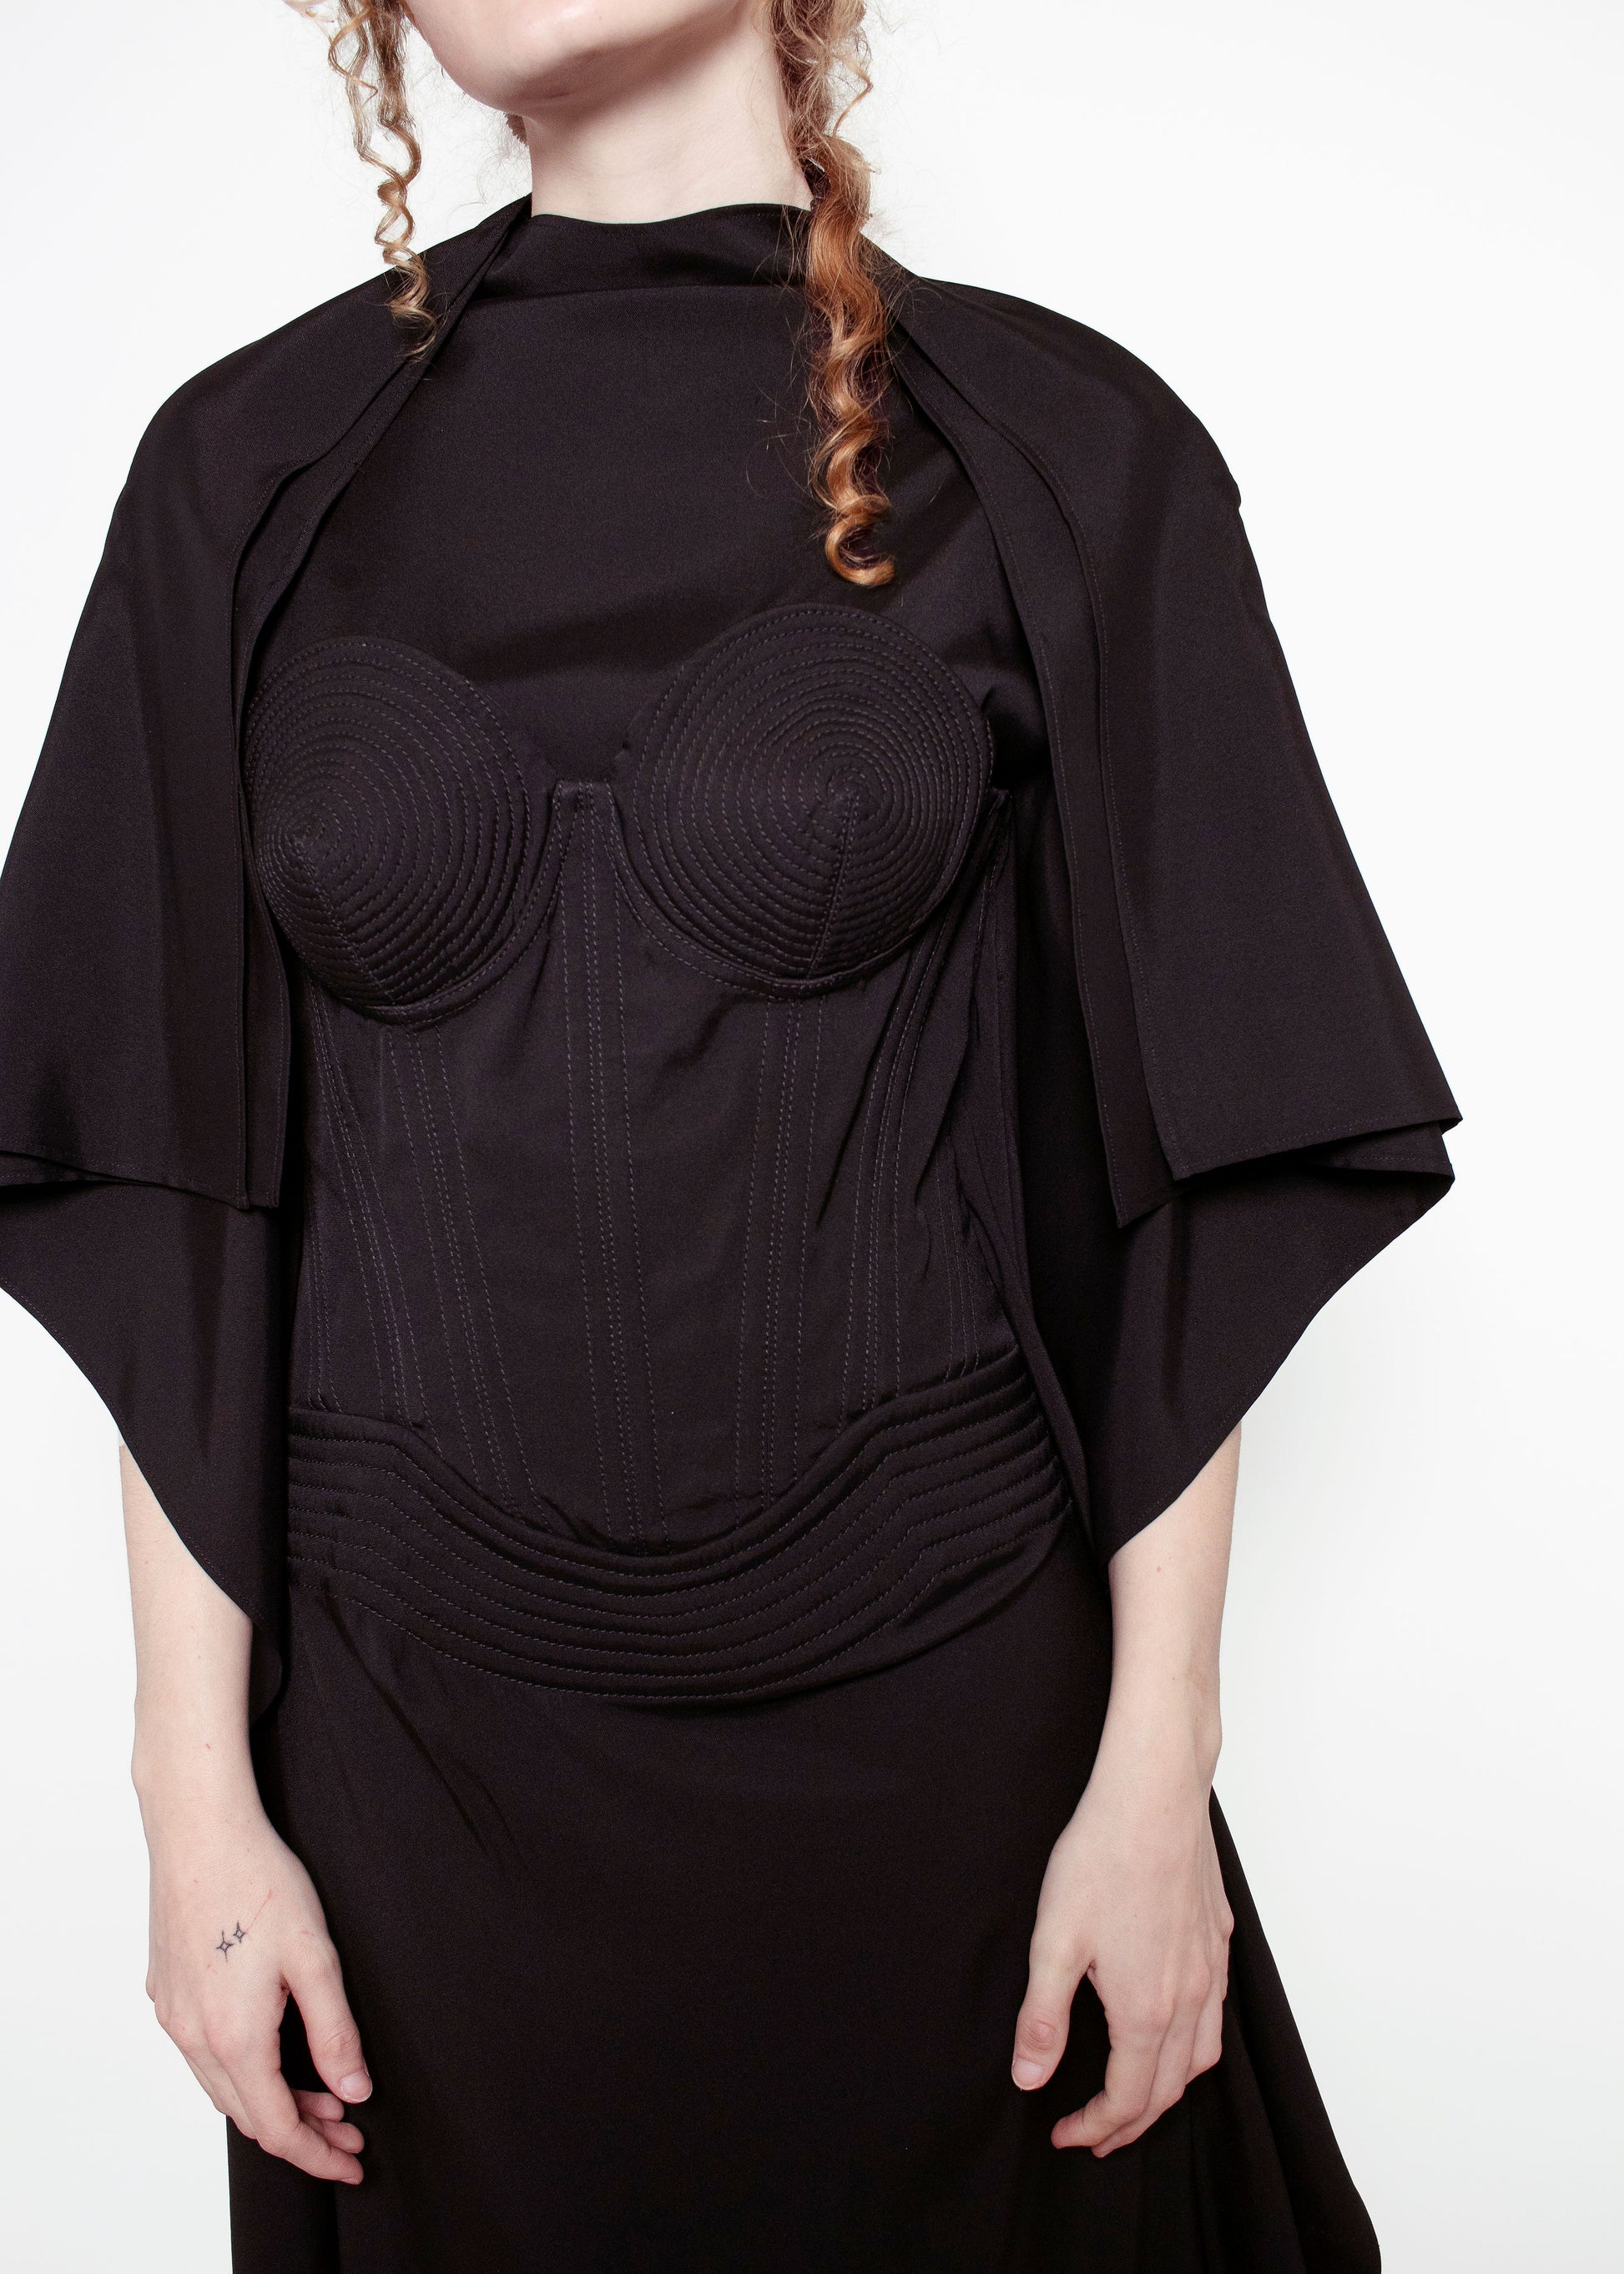 Jean Paul Gaultier F/W 2010 Black Cone Bra Corset Dress – The Kit Vintage